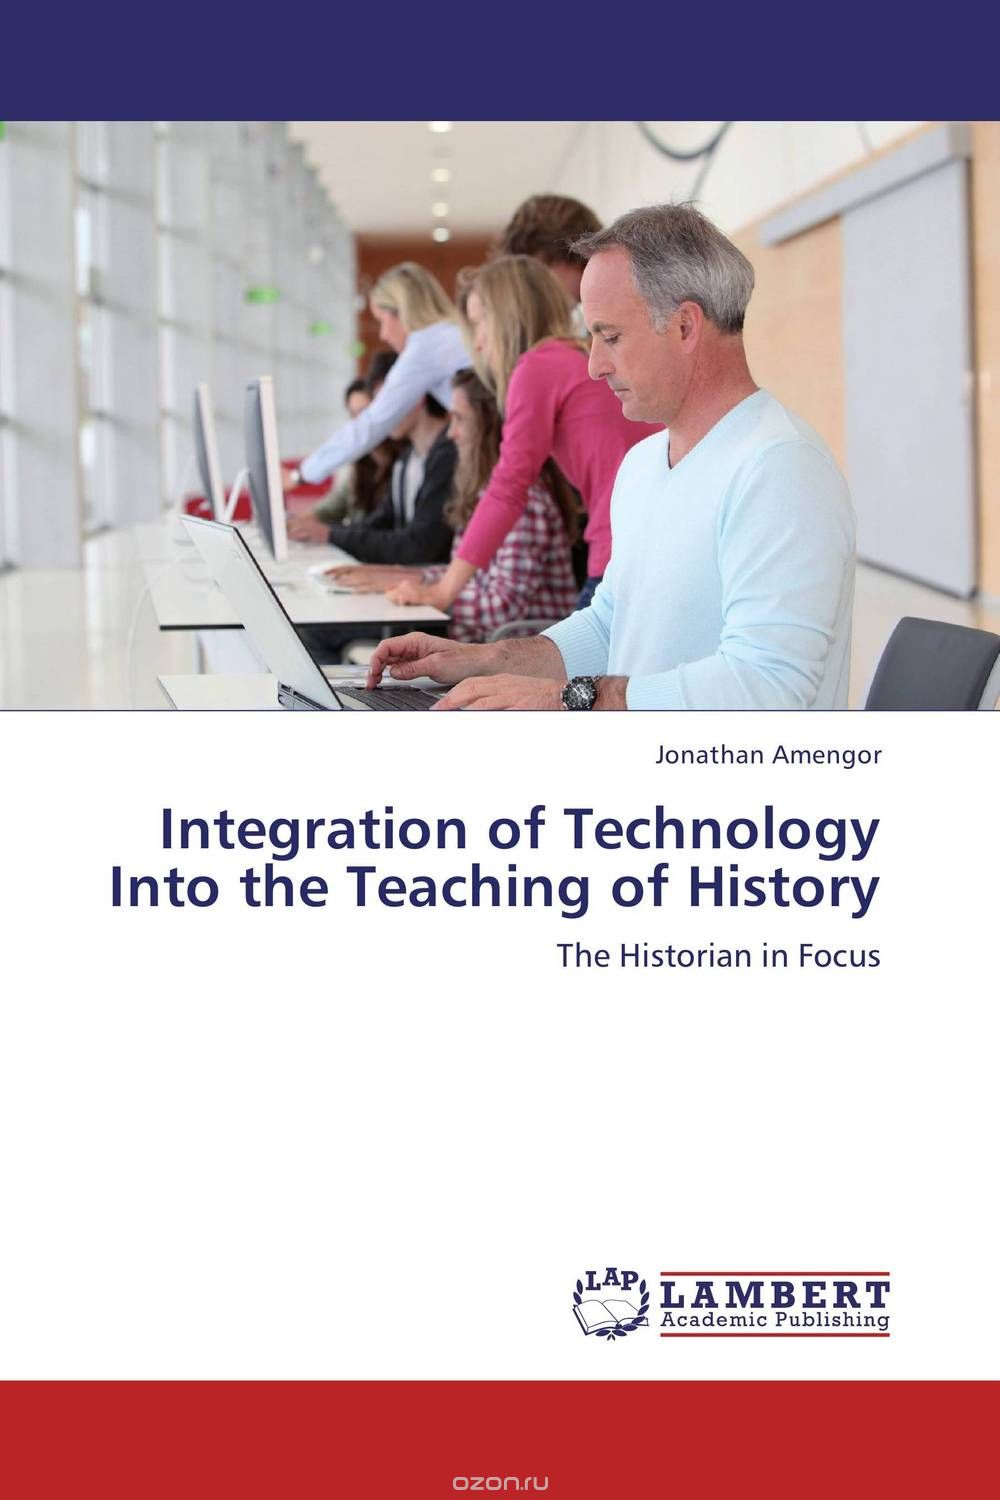 Скачать книгу "Integration of Technology Into the Teaching of History"